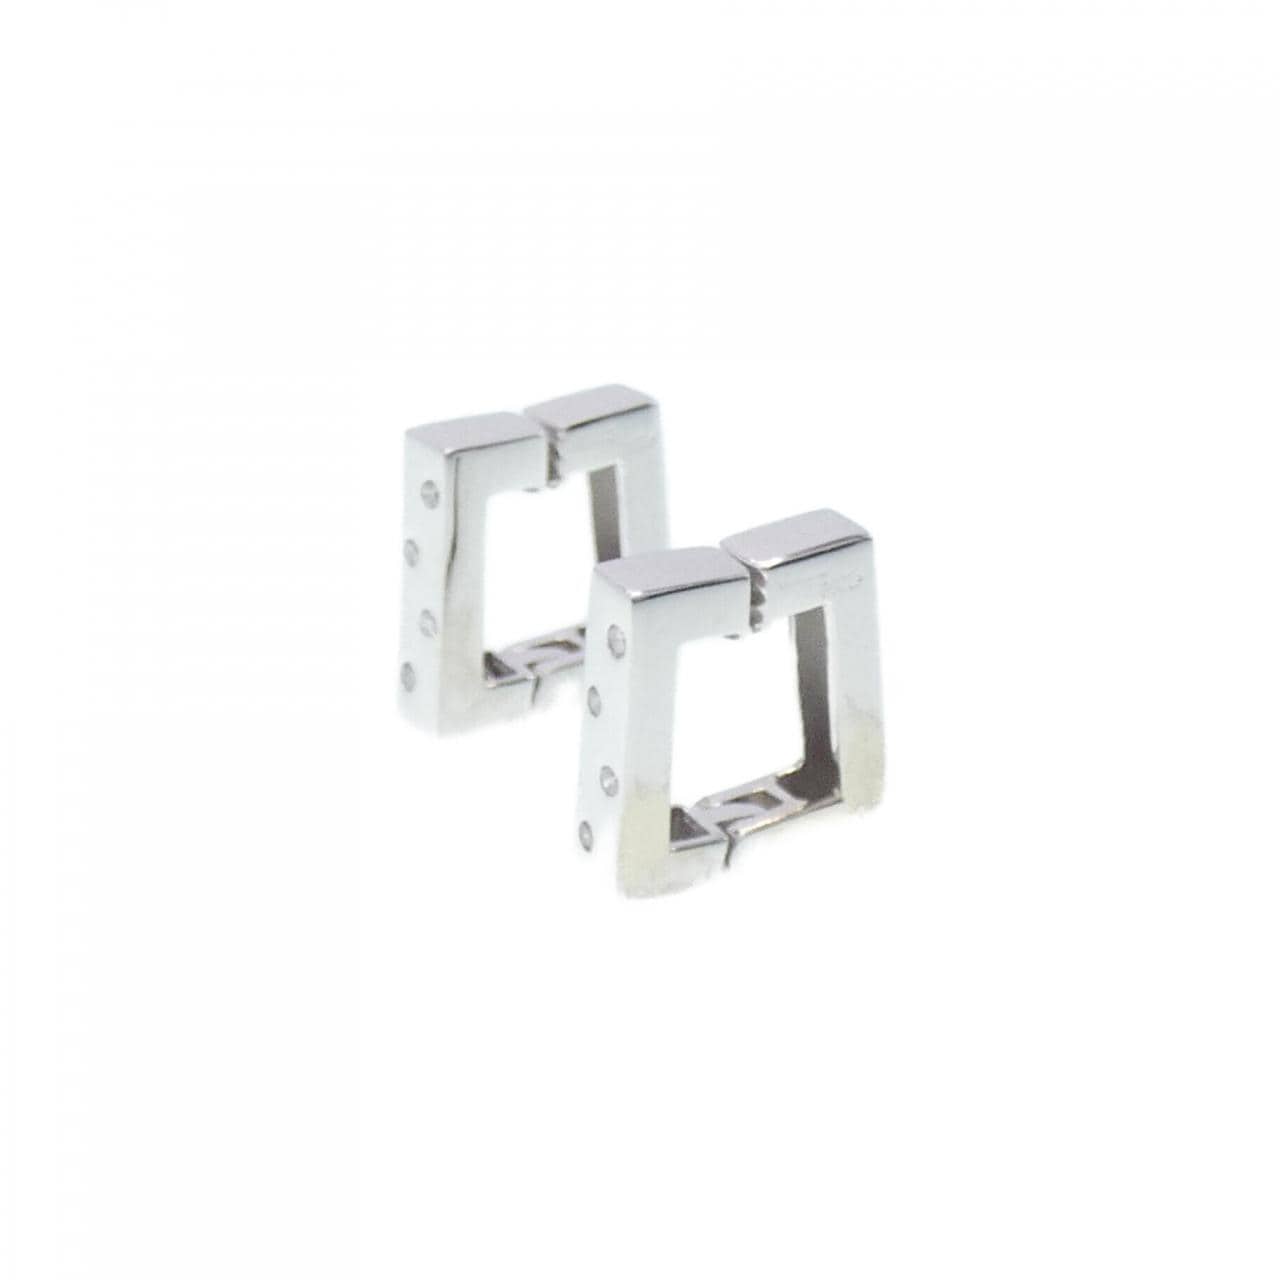 K14WG Diamond earrings 0.10CT